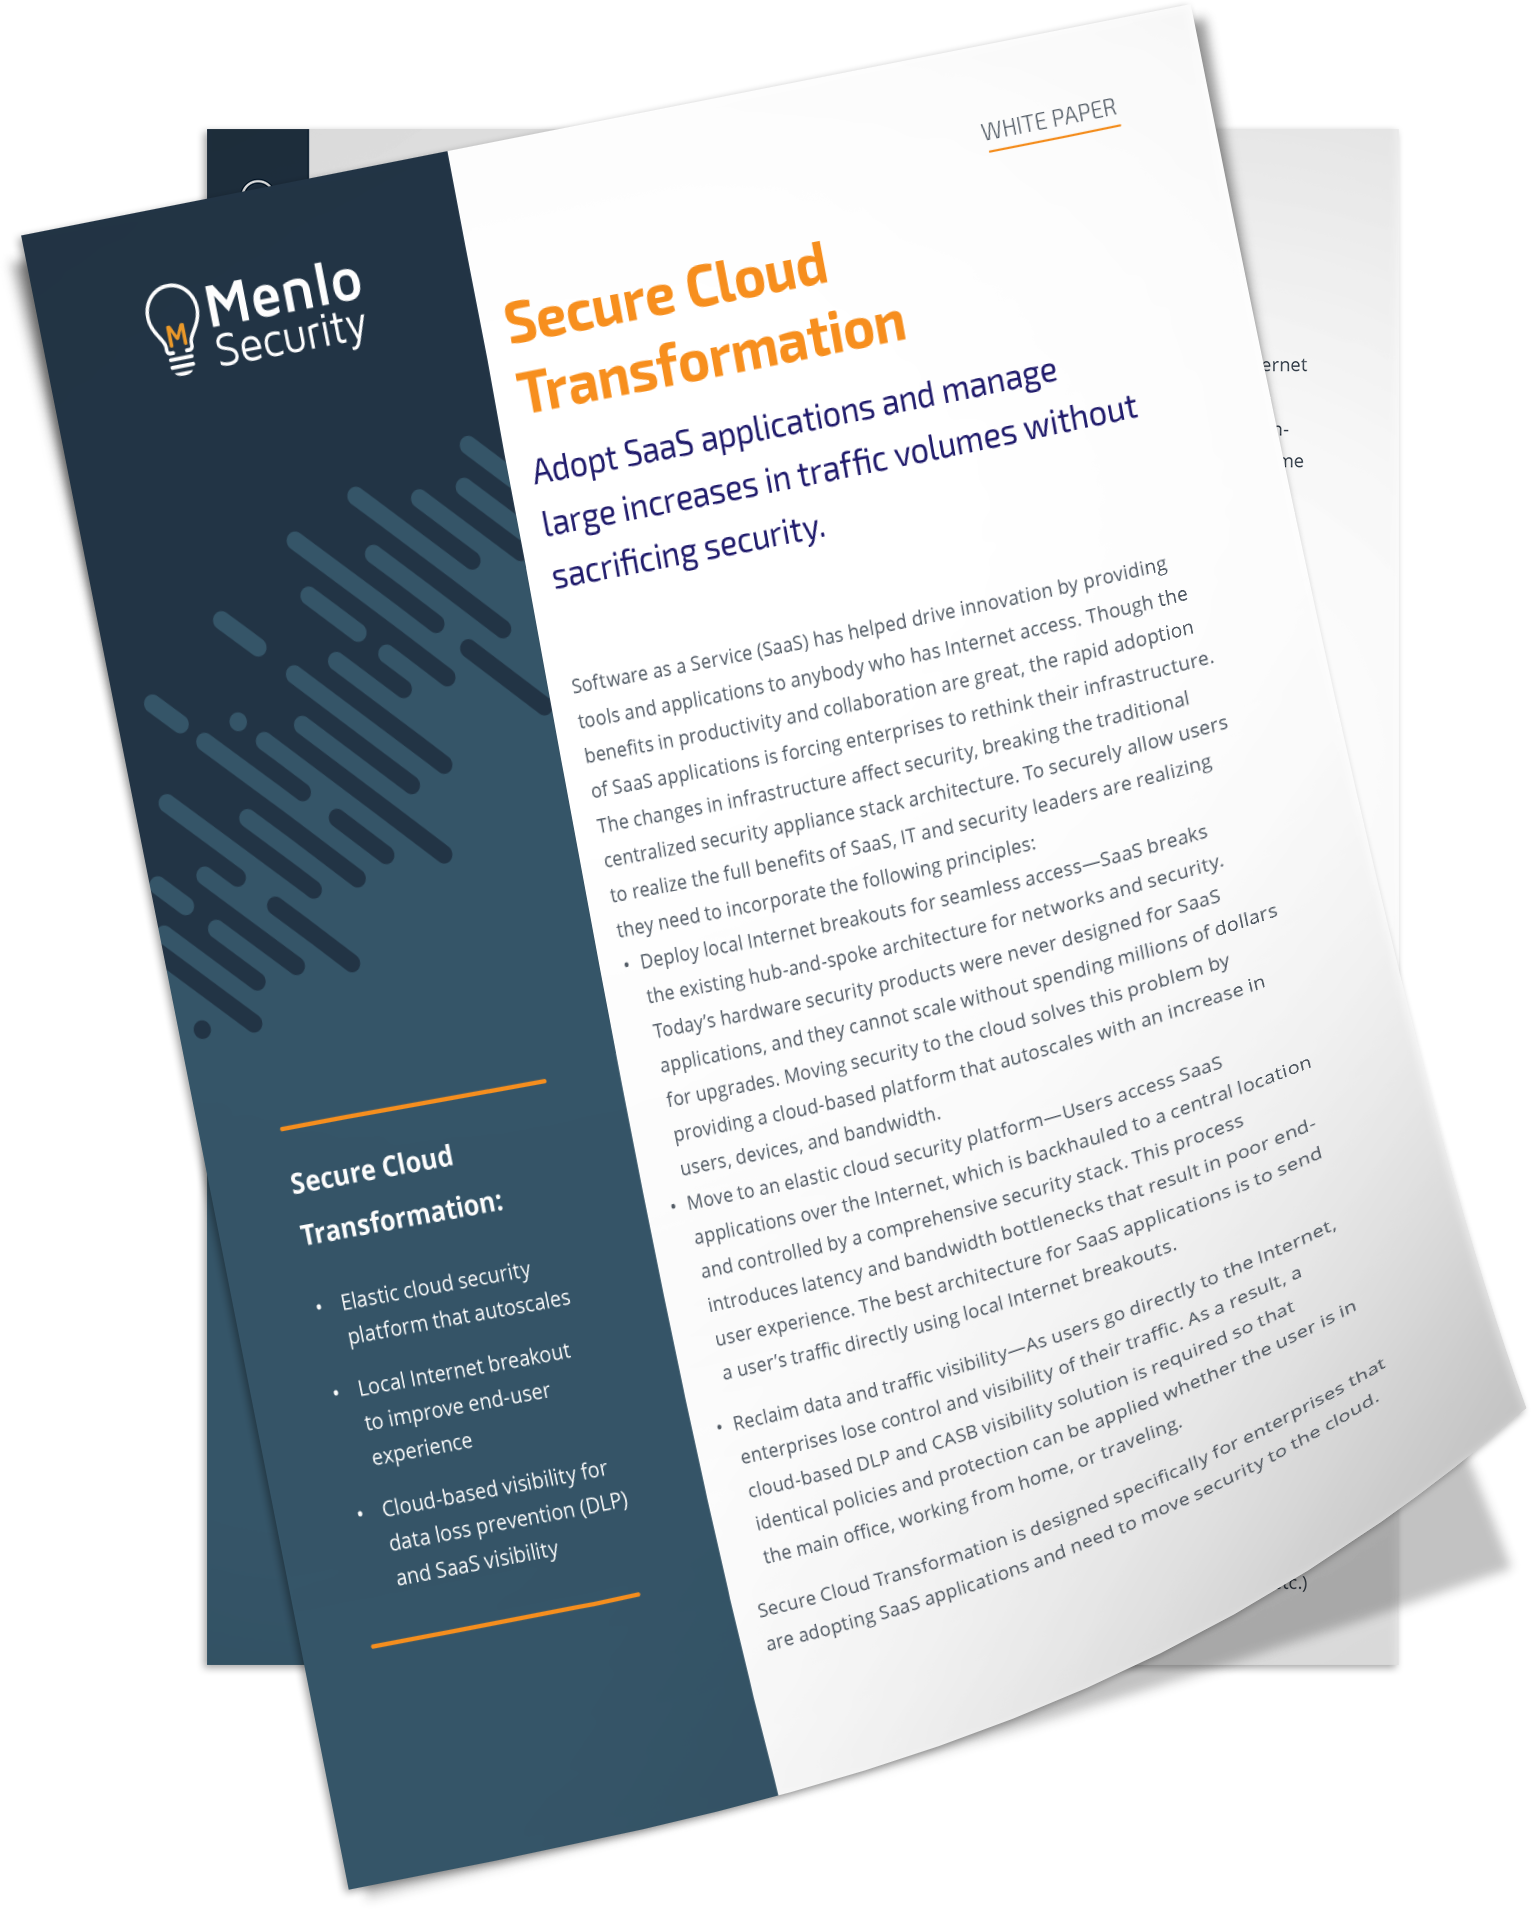 Menlo-Security-Secure-Cloud-Transformation-WhitePape